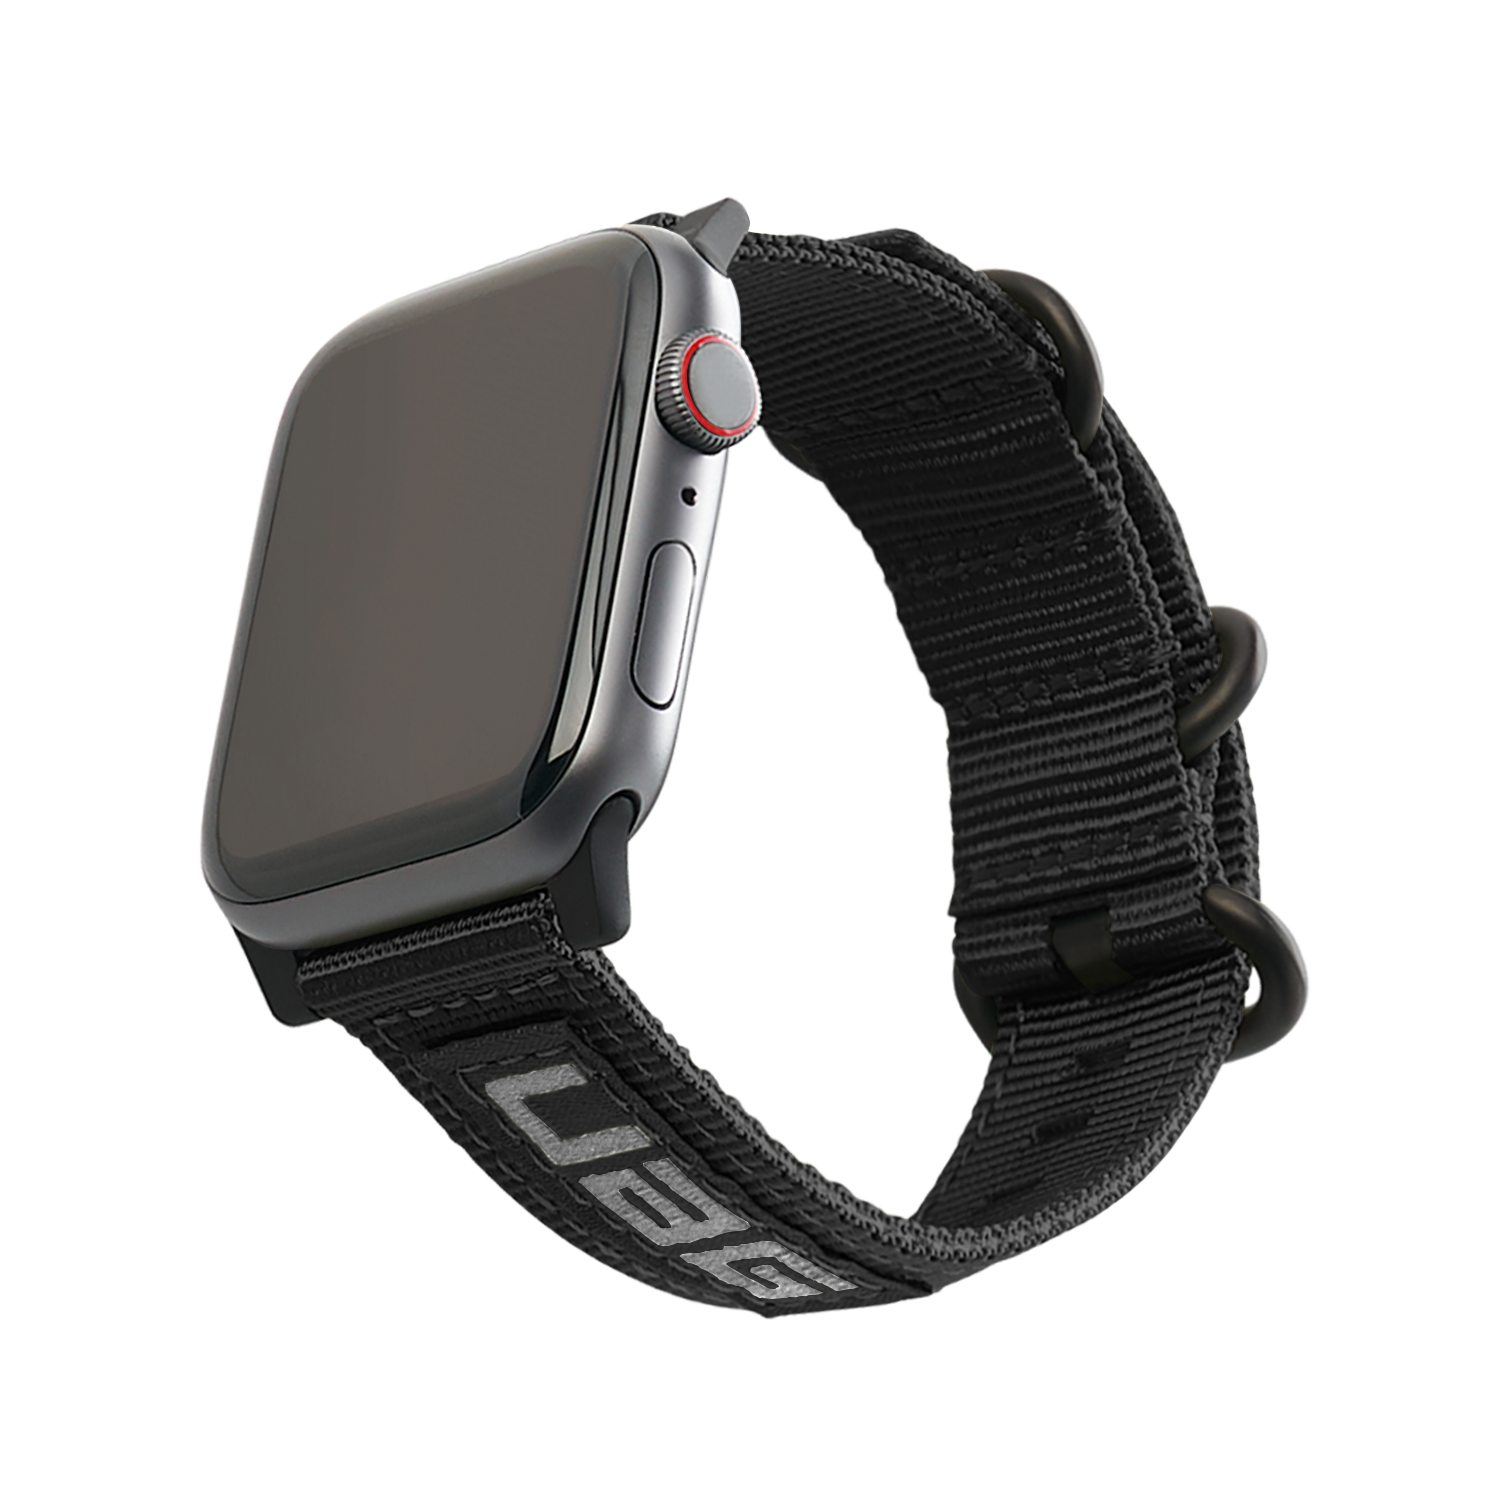 Apple Watch SE 44mm Nato Eco Strap Black